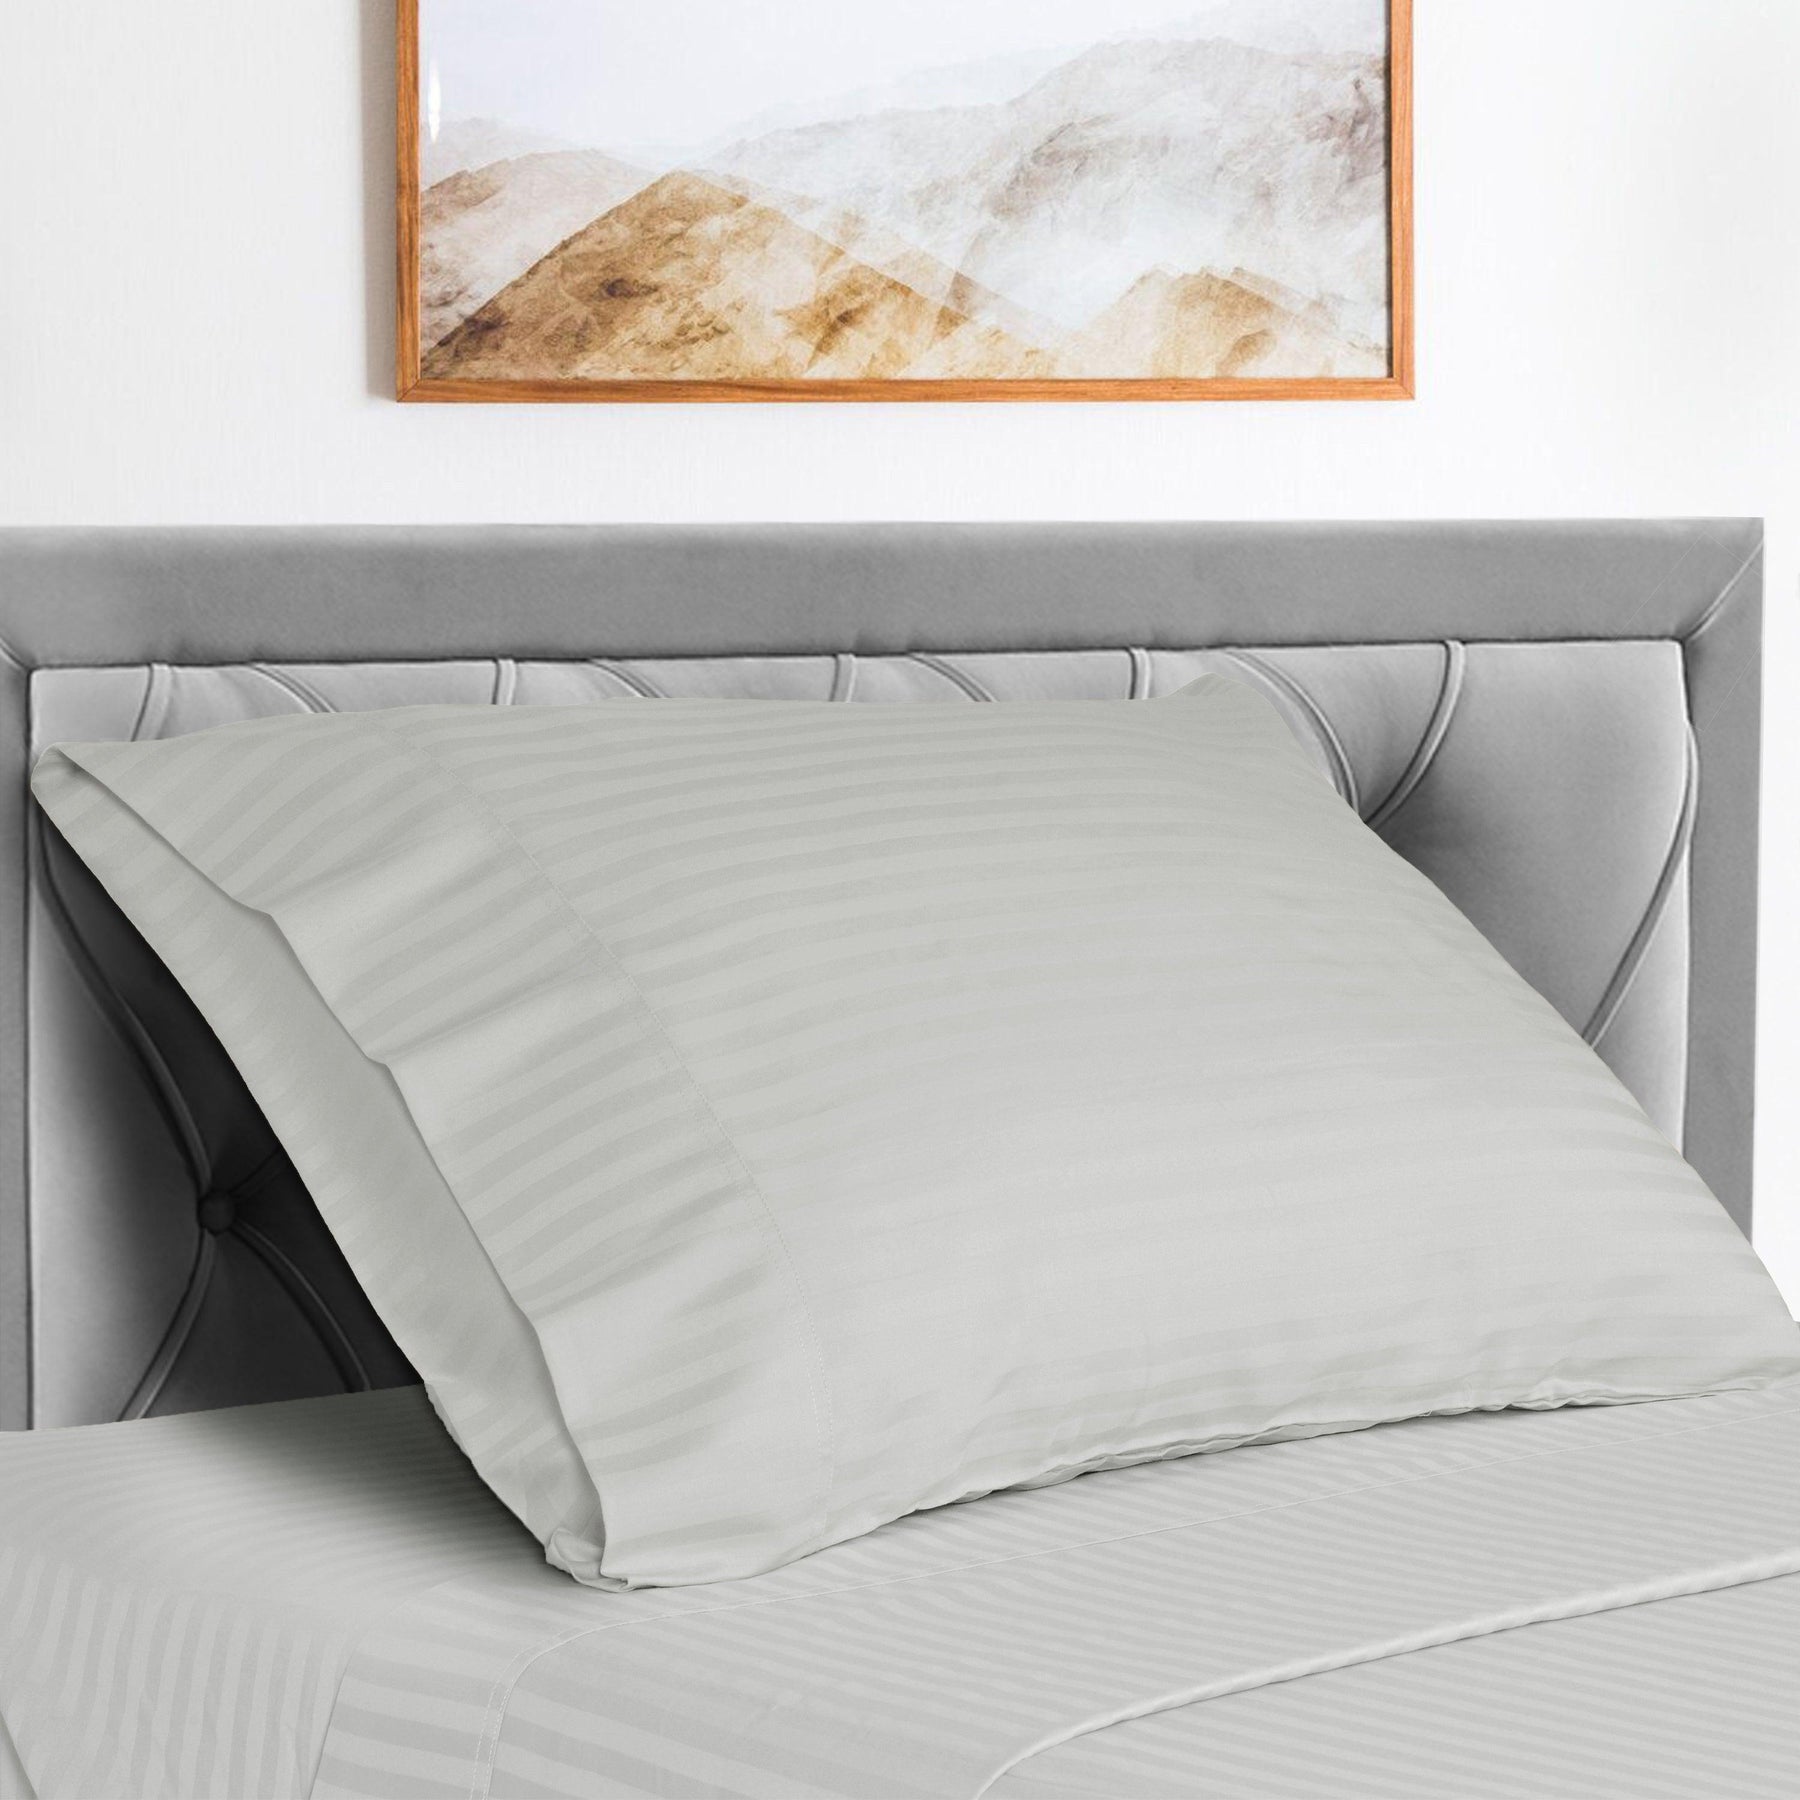  Superior Microfiber Wrinkle Resistant and Breathable Stripe Deep Pocket Bed Sheet Set - Chrome